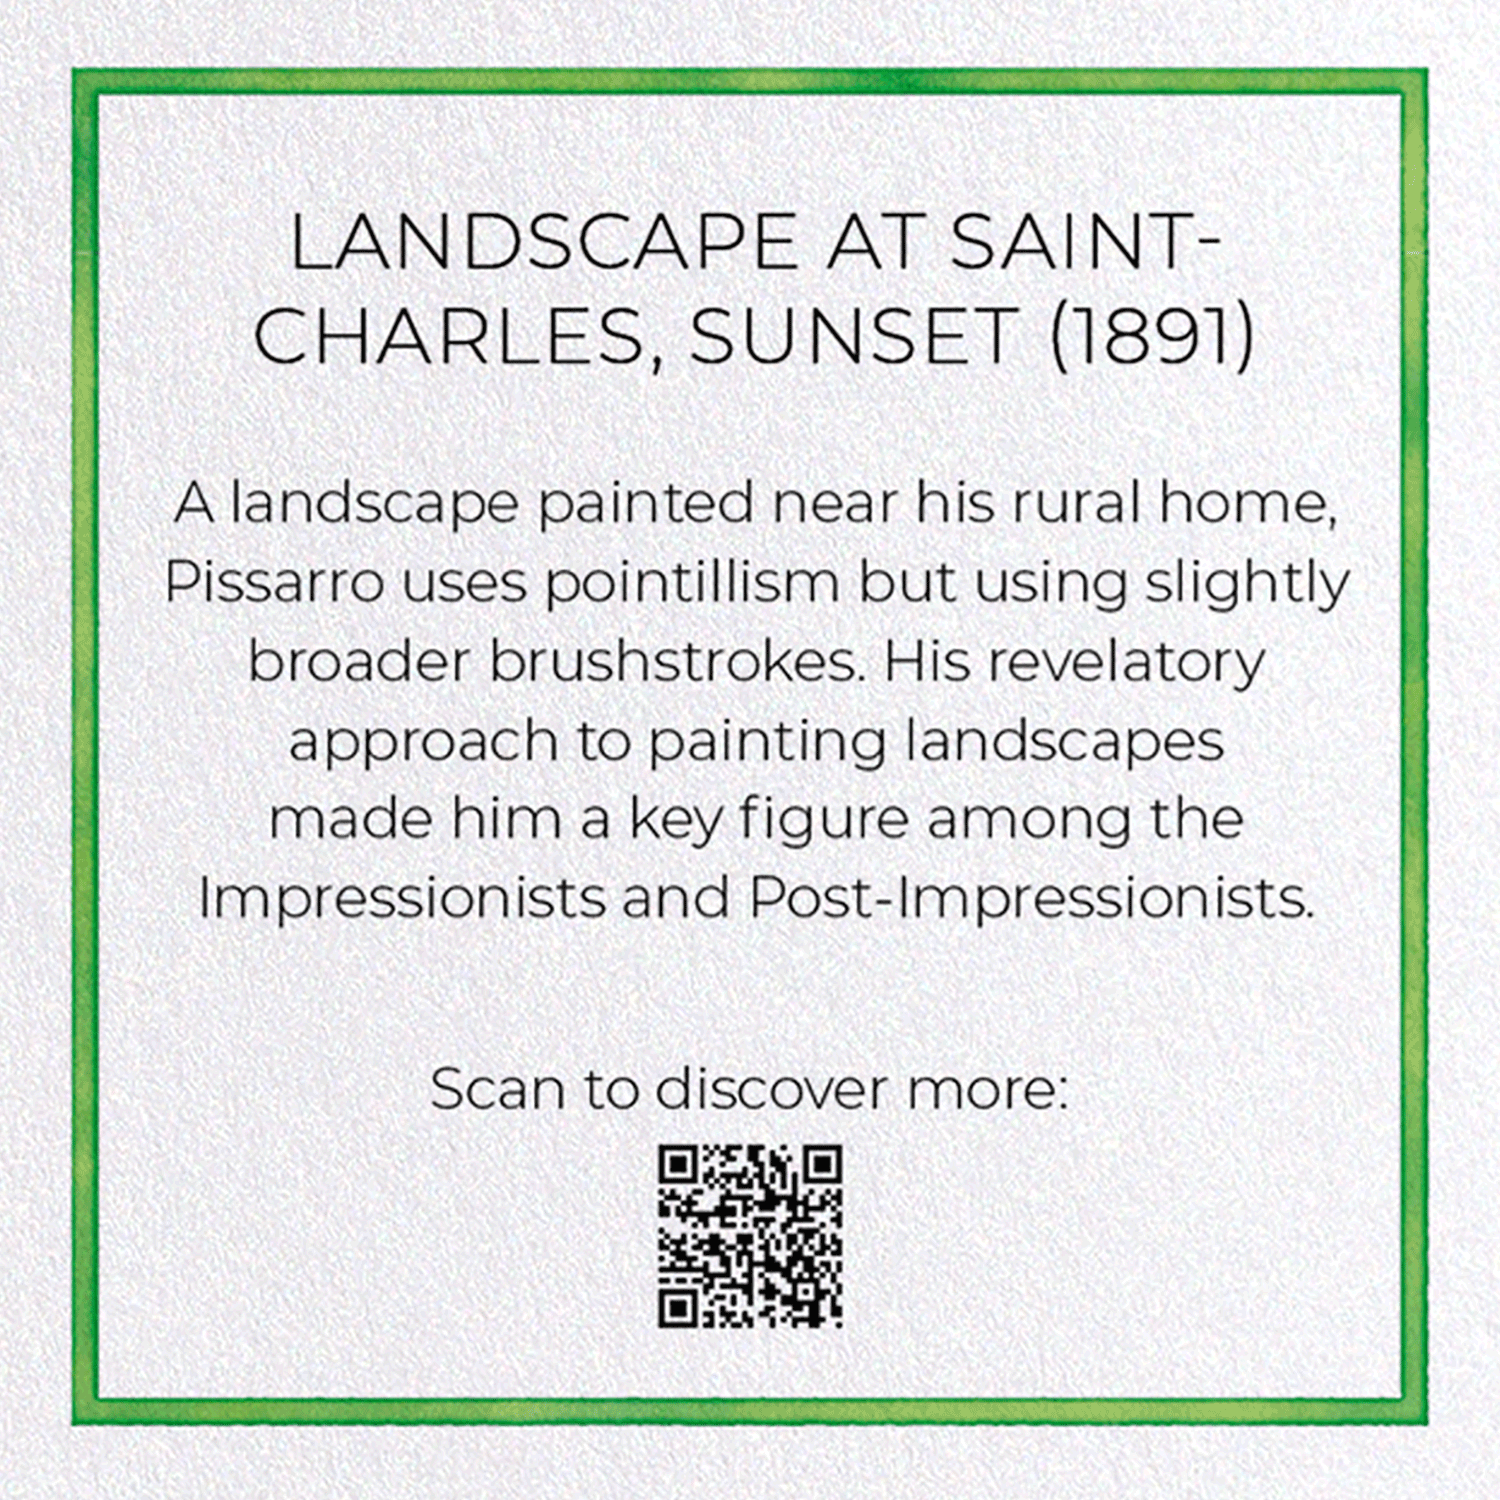 LANDSCAPE AT SAINT-CHARLES, SUNSET (1891)